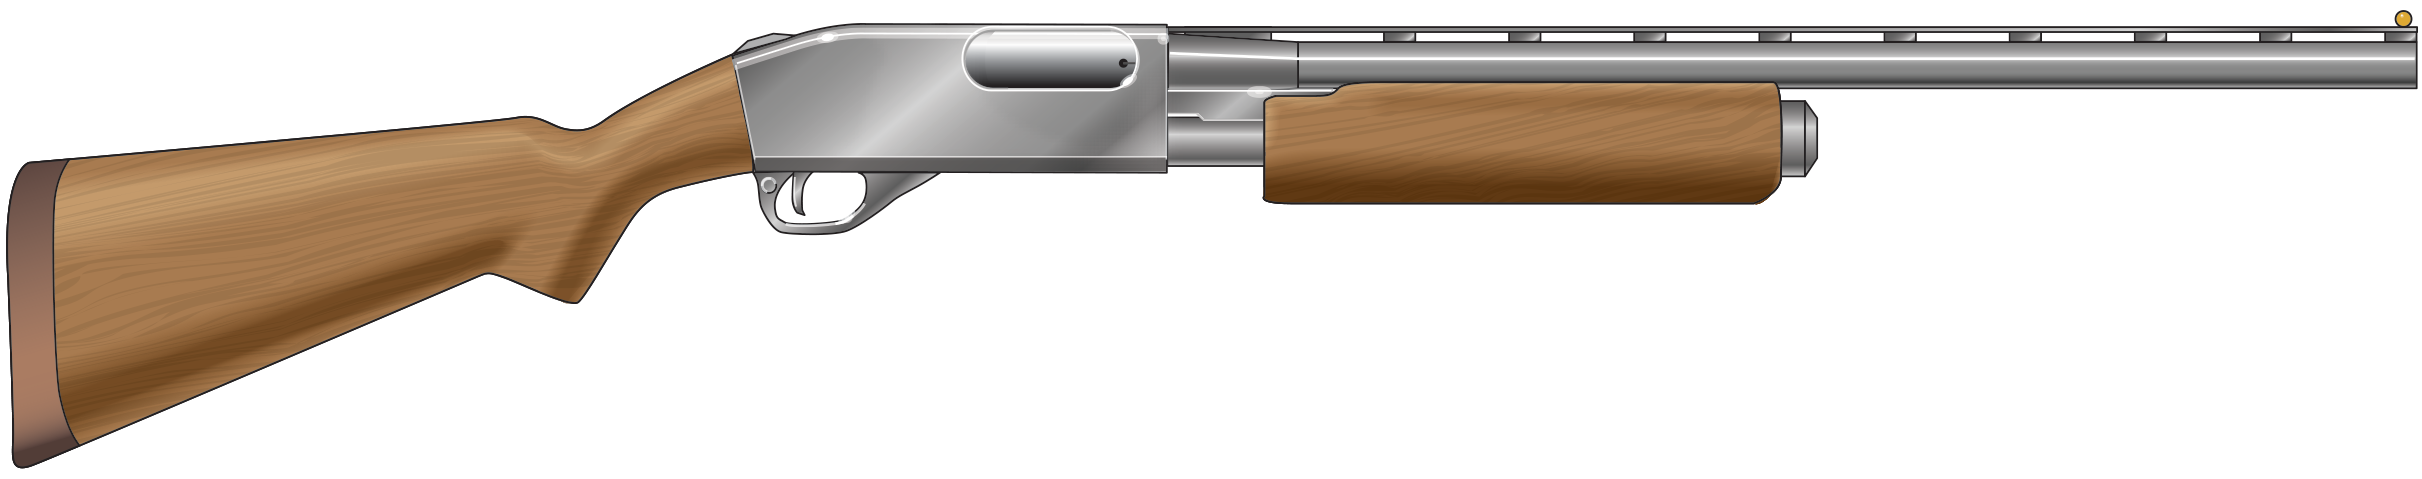 cartoon pump shotgun